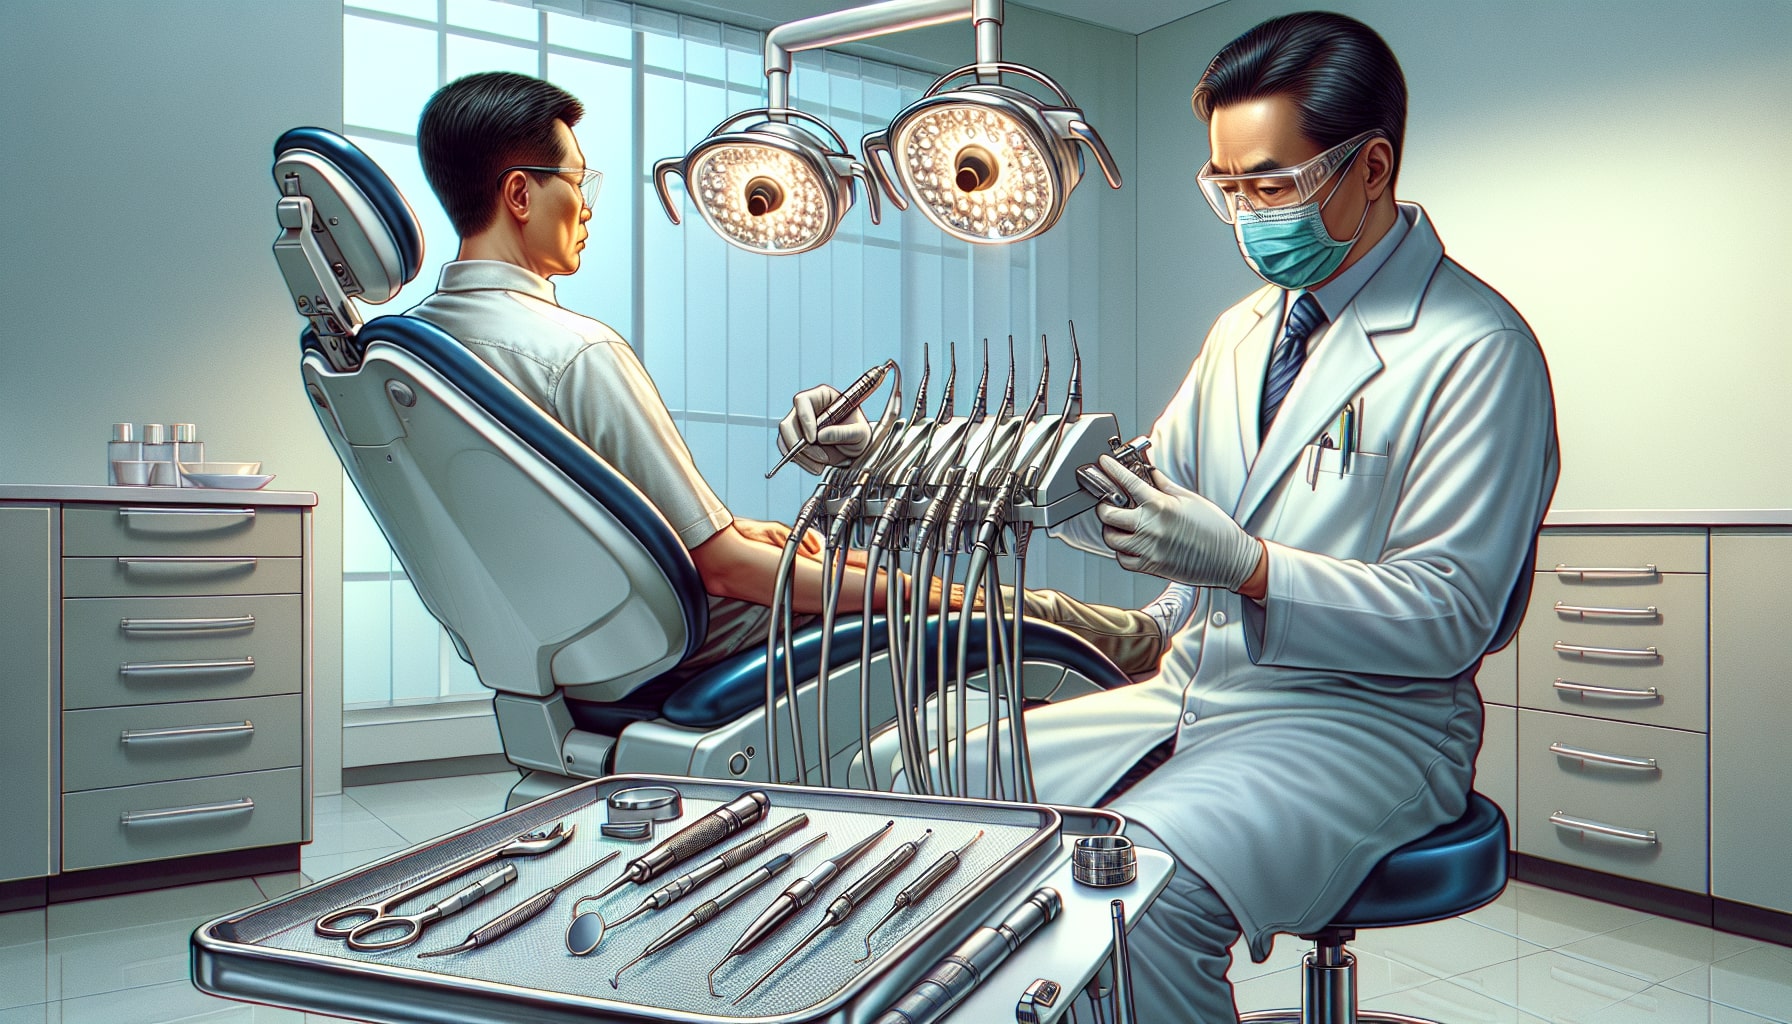 Illustration of a dental professional preparing a patient for nitrous oxide sedation